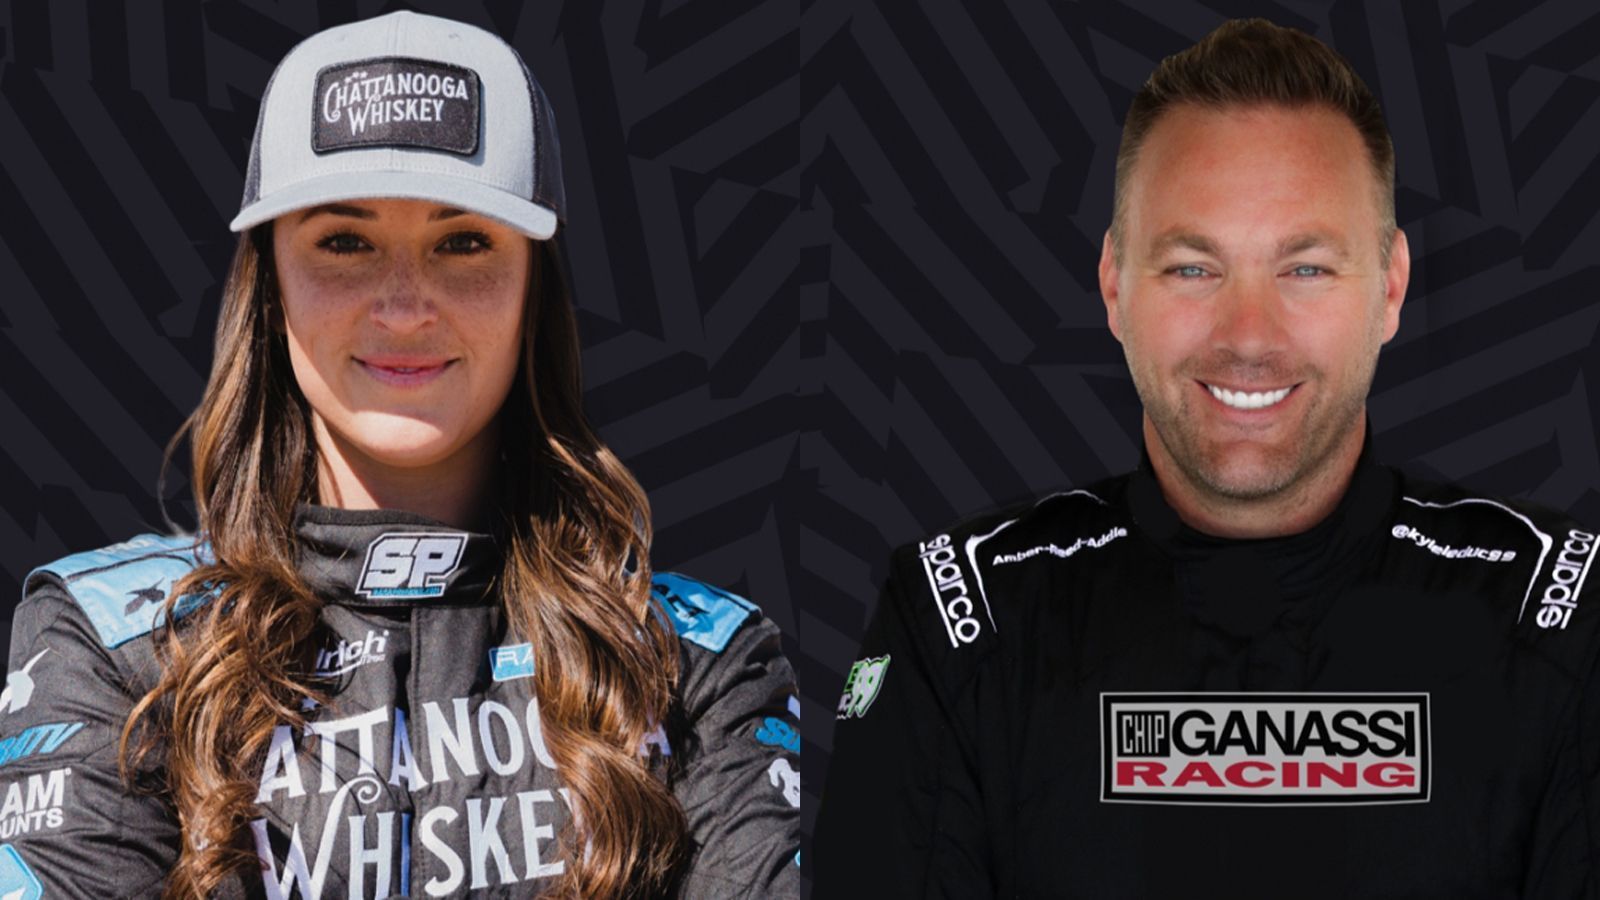 
                <strong>Chip Ganassi Racing</strong><br>
                &#x2022; Fahrer: Sara Price (USA) u. Kyle Leduc (USA) -<br>&#x2022; Team aus: USA<br>
              